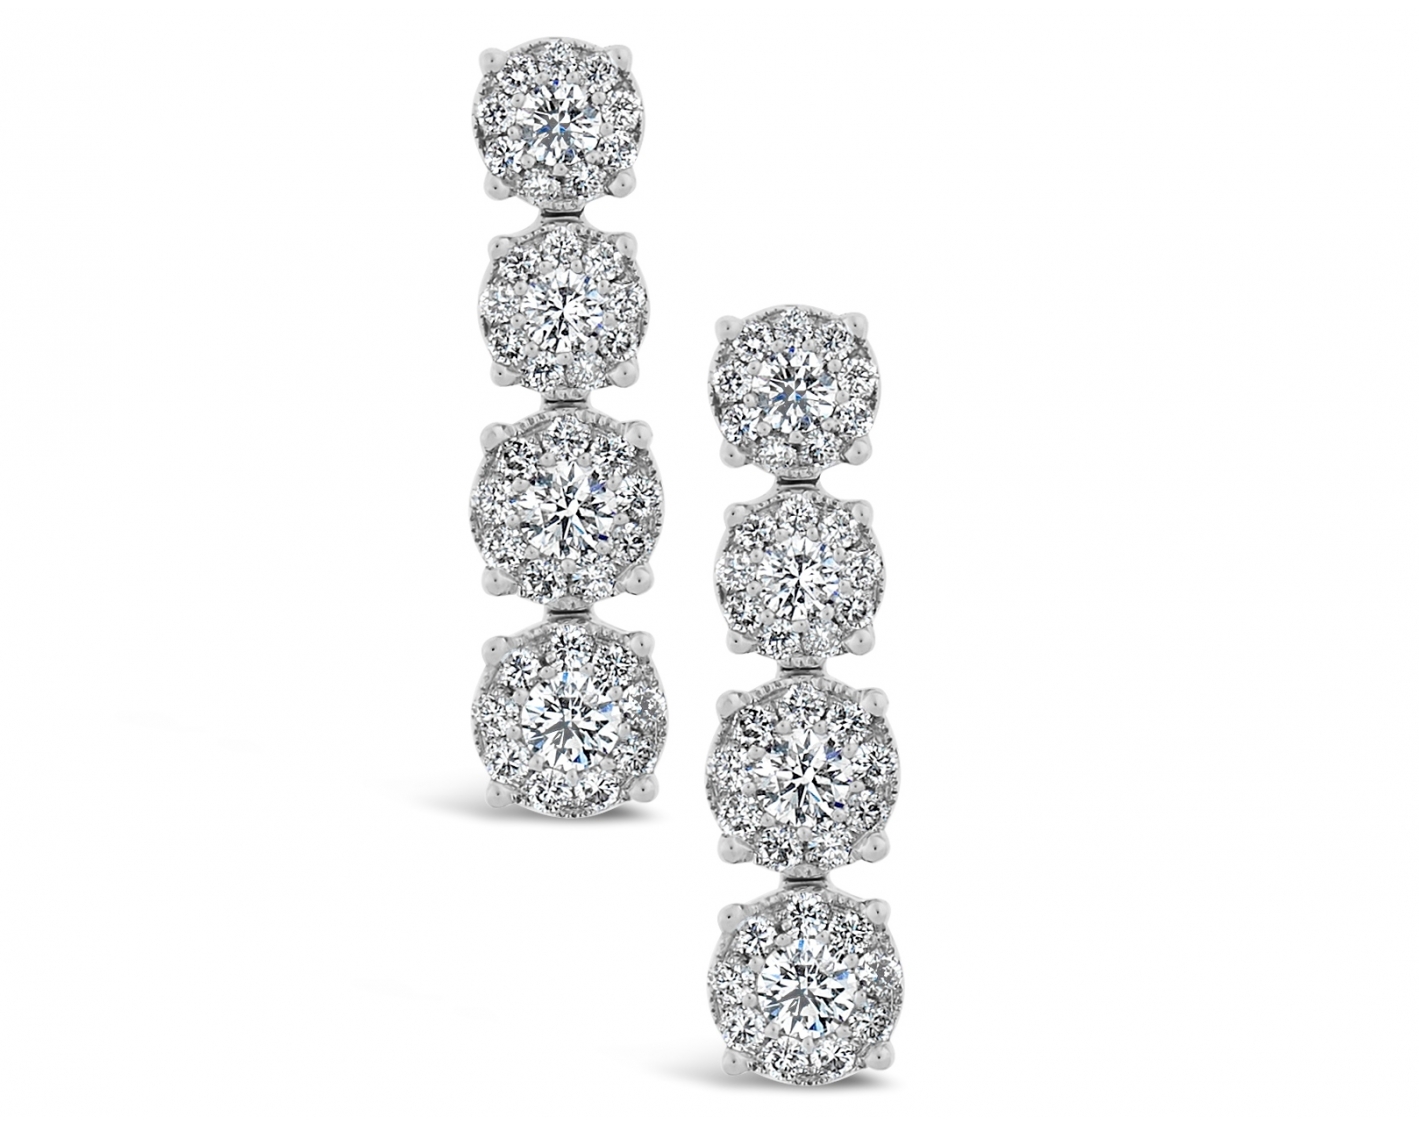 18k rose gold halo illusion set hanging diamond earrings Photos & images